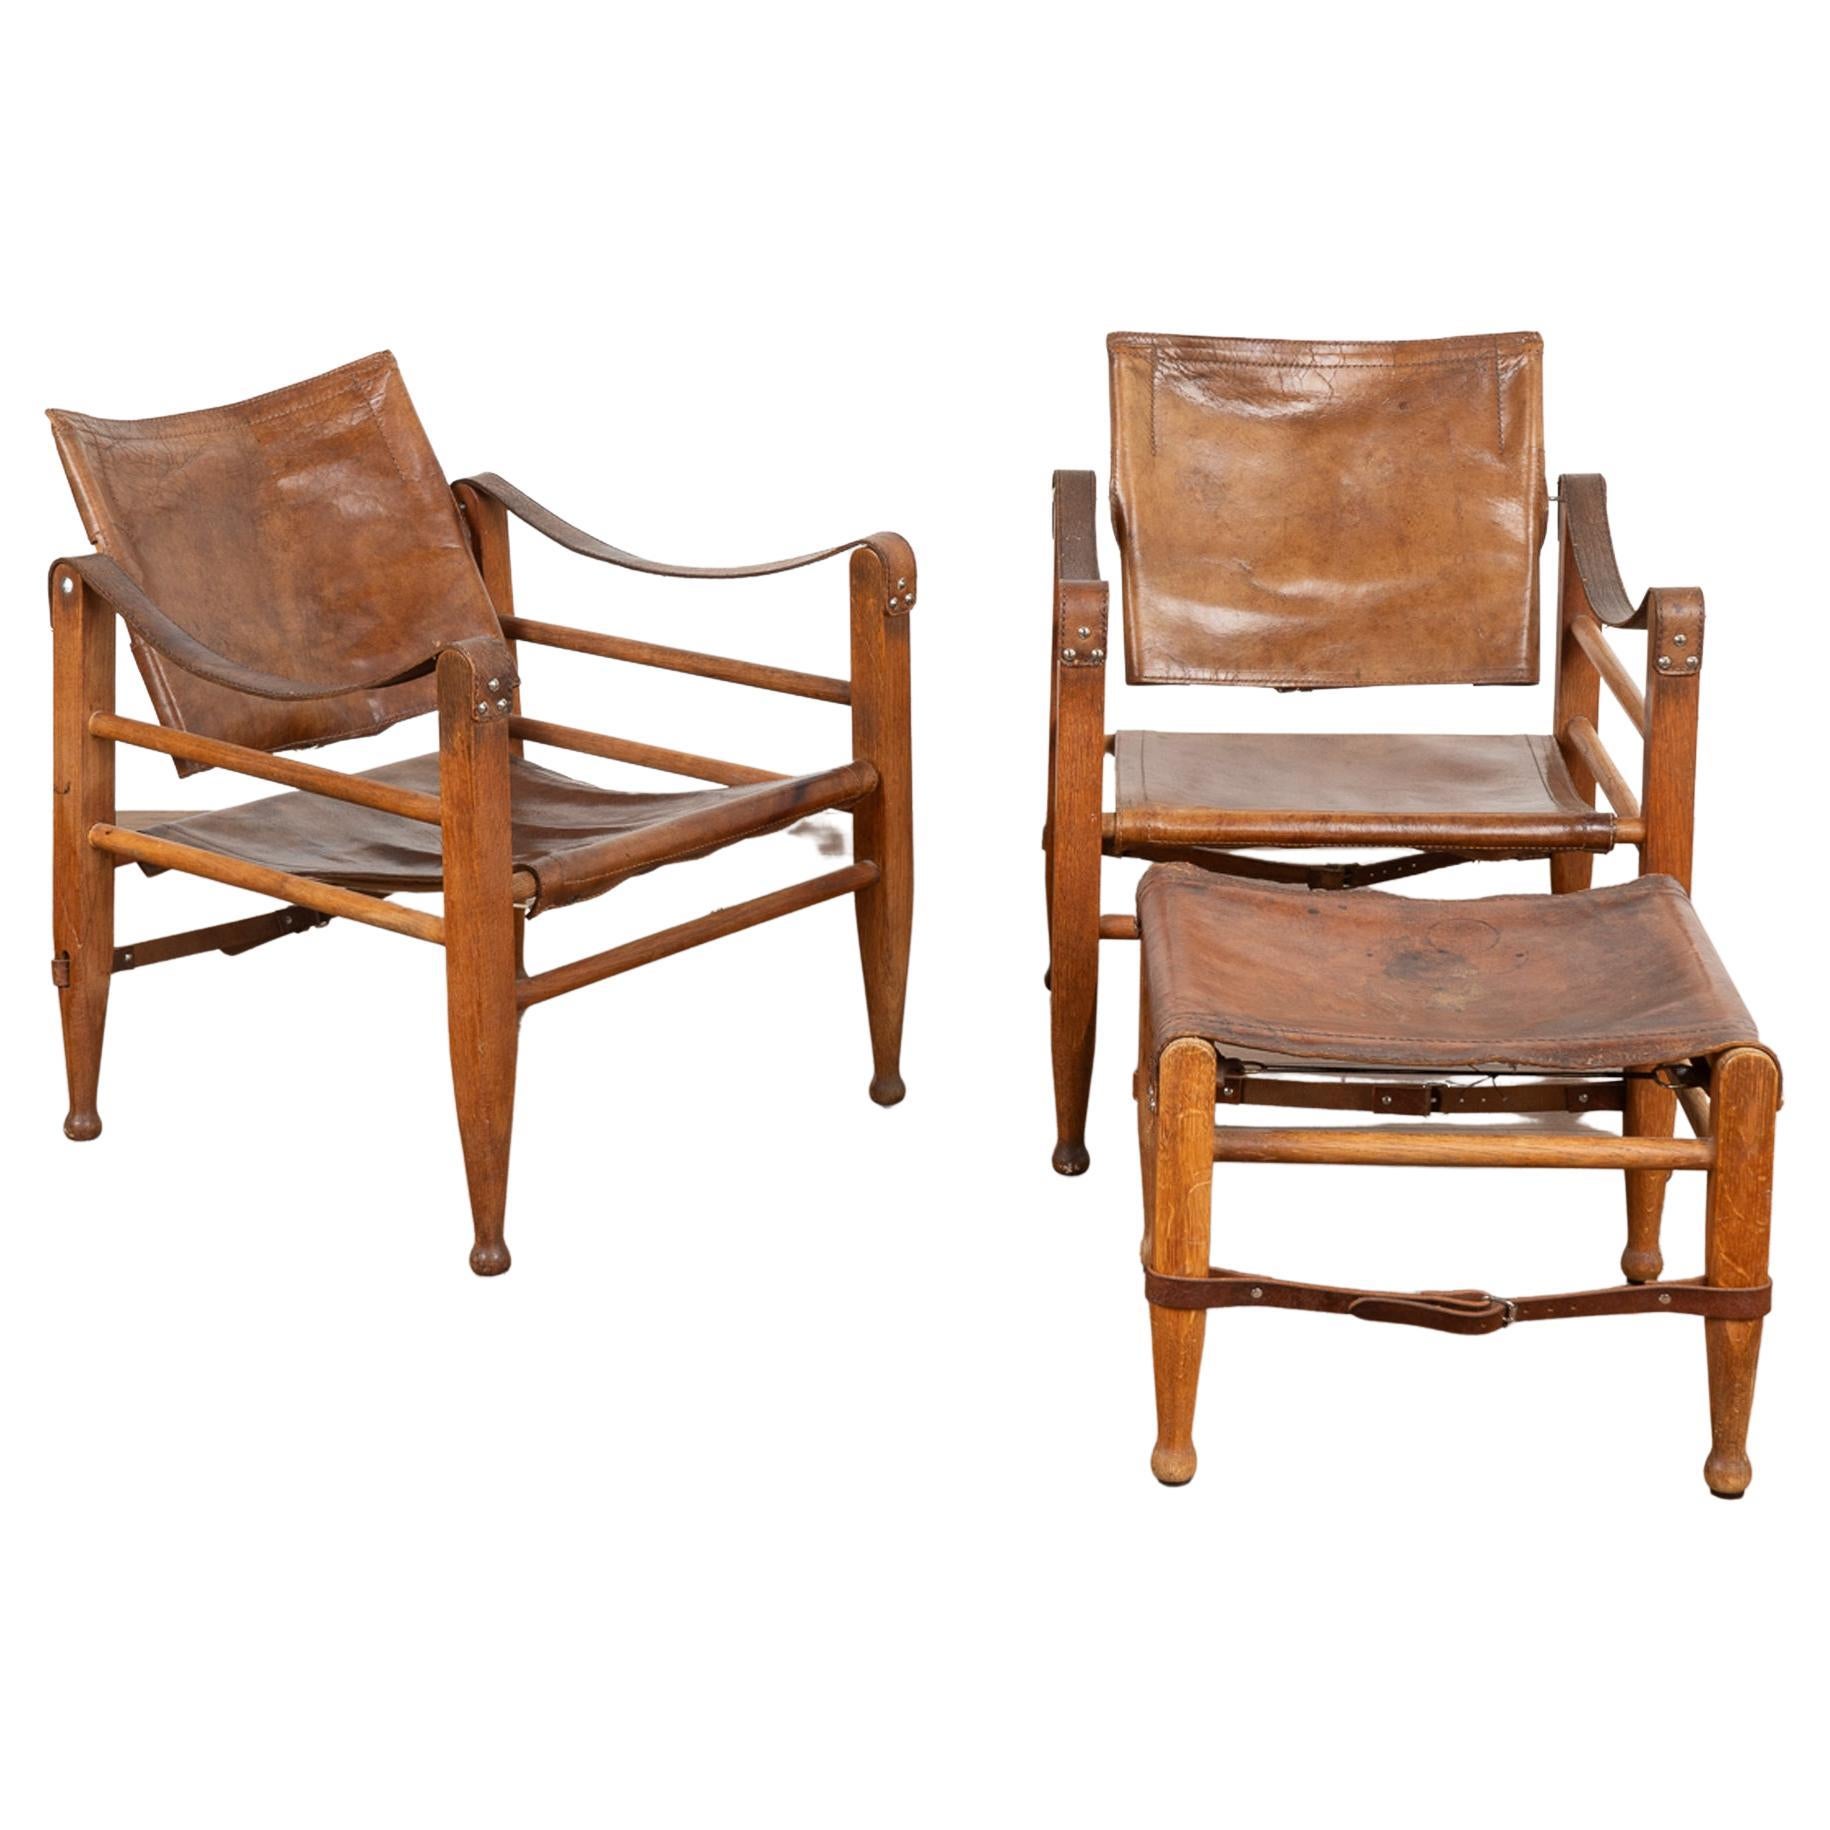 Pair, Mid Century Vintage Leather Safari Chairs and Ottoman, Denmark 1960's